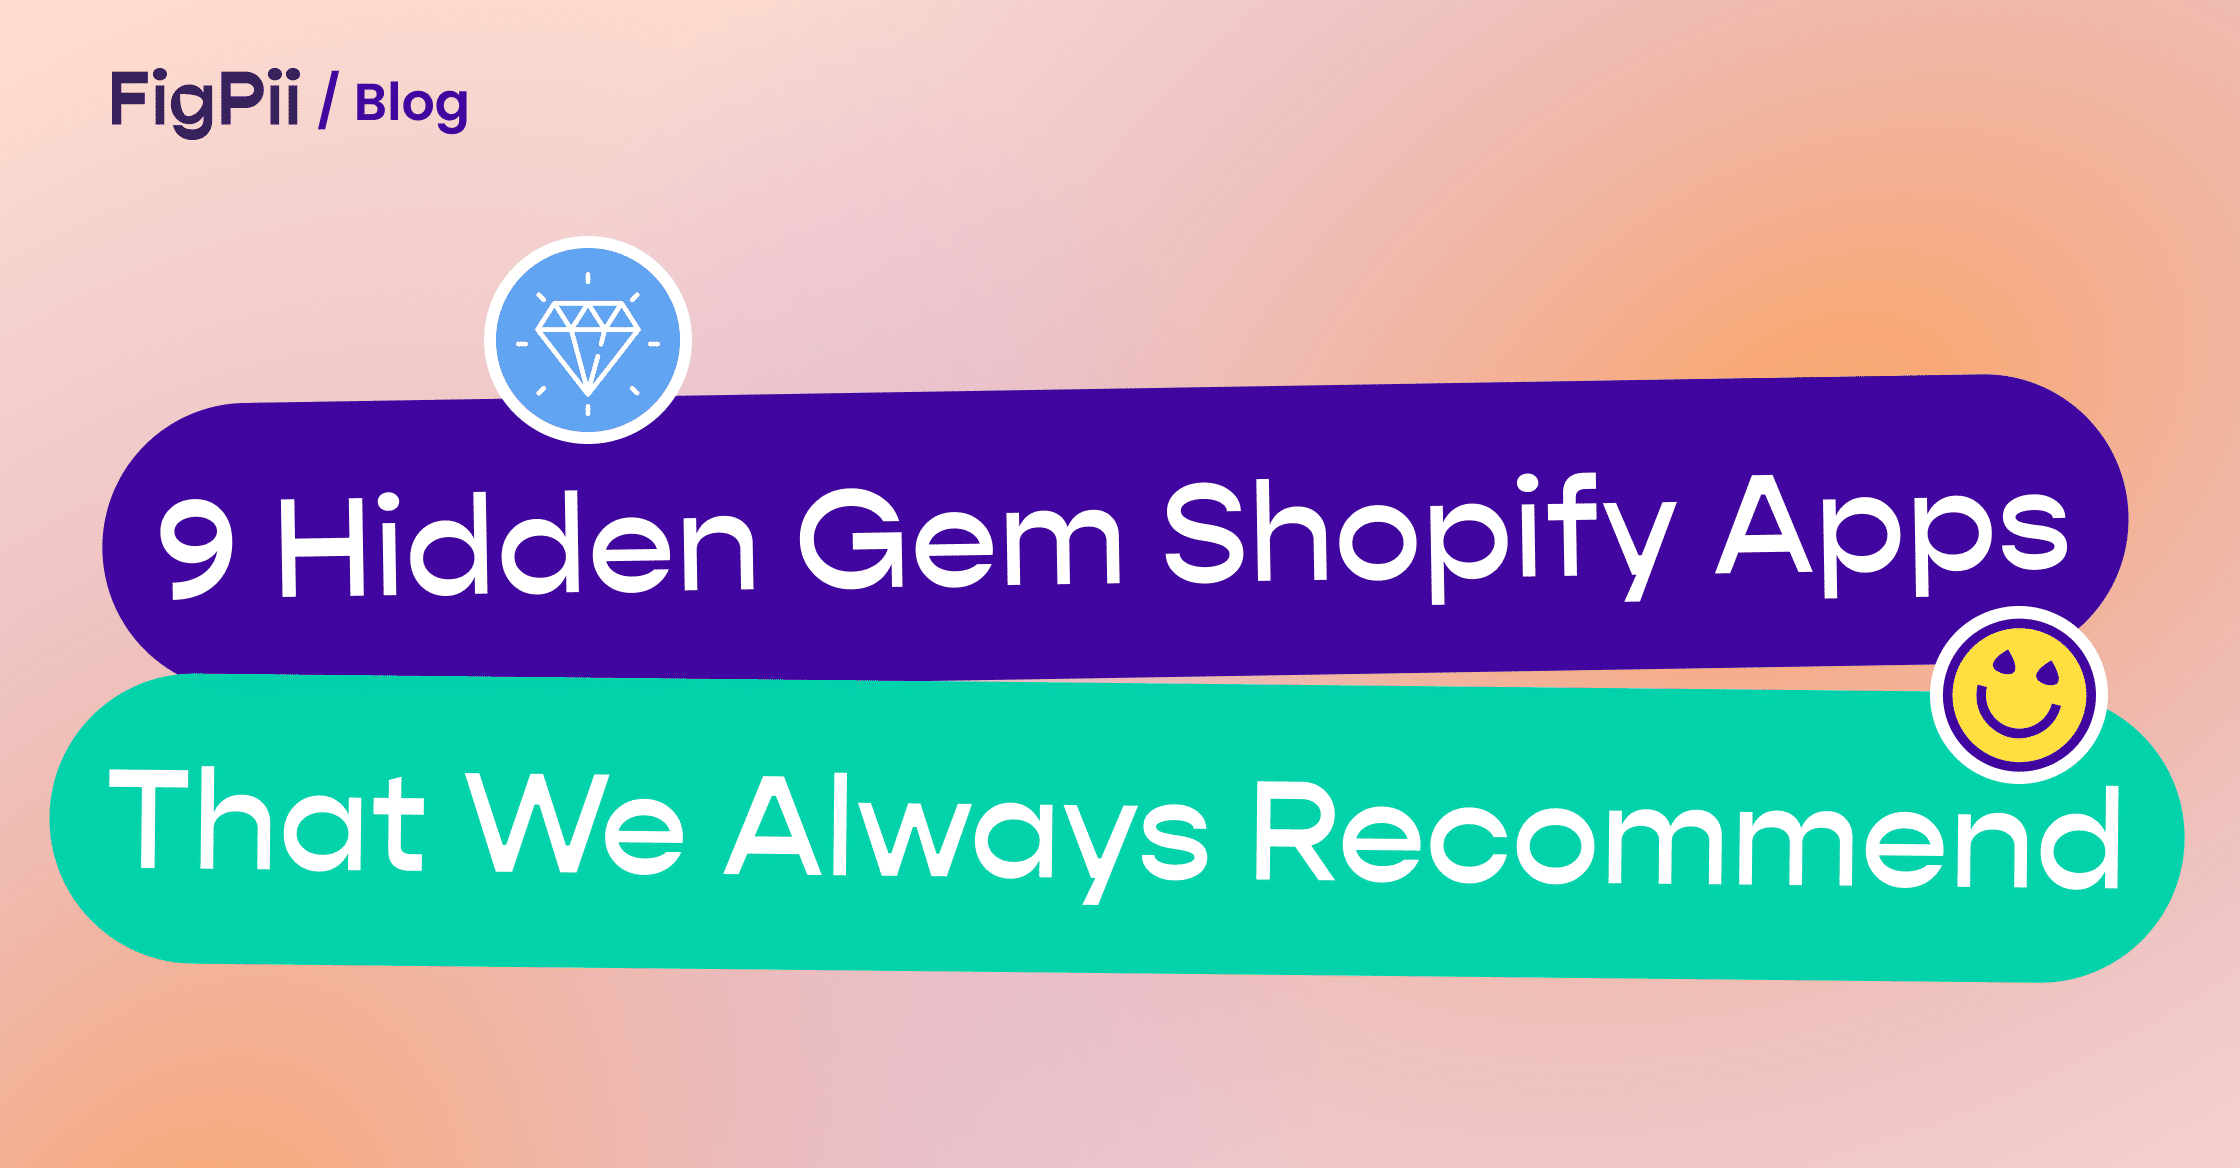 10 Hidden Gem Shopify Apps That We Always Recommend - FigPii blog